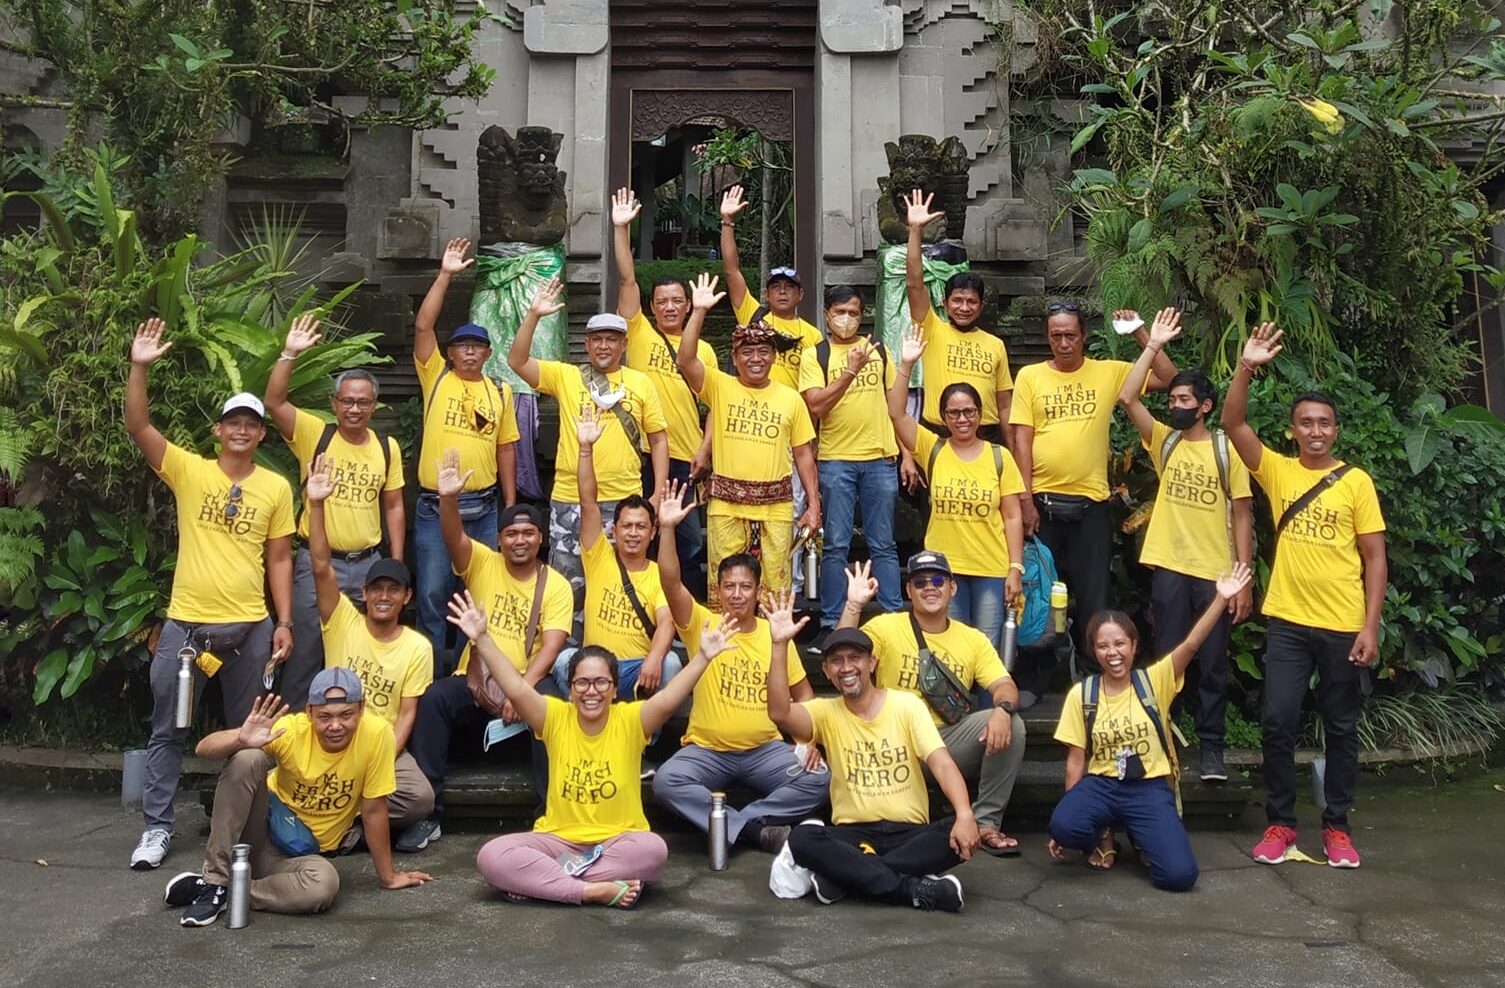 Trash Hero holds zero waste workshop in Bali